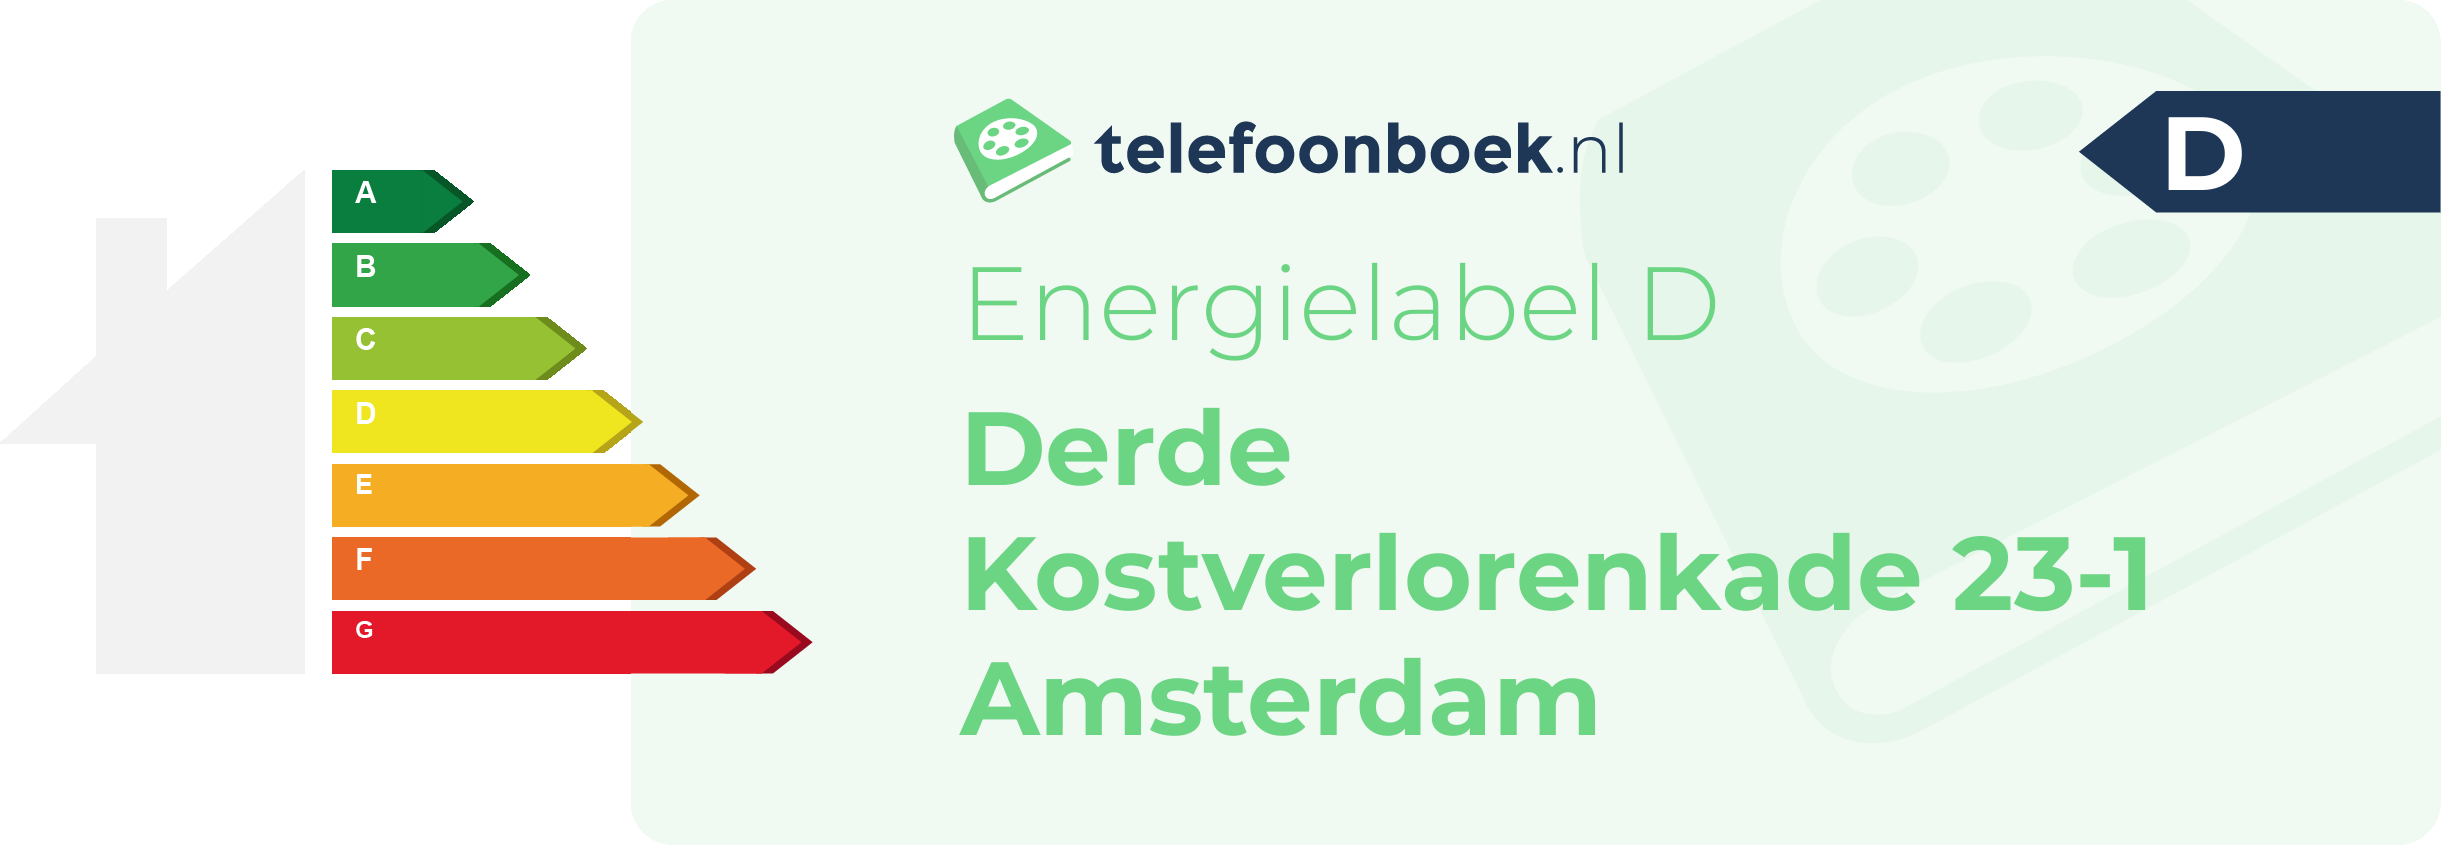 Energielabel Derde Kostverlorenkade 23-1 Amsterdam